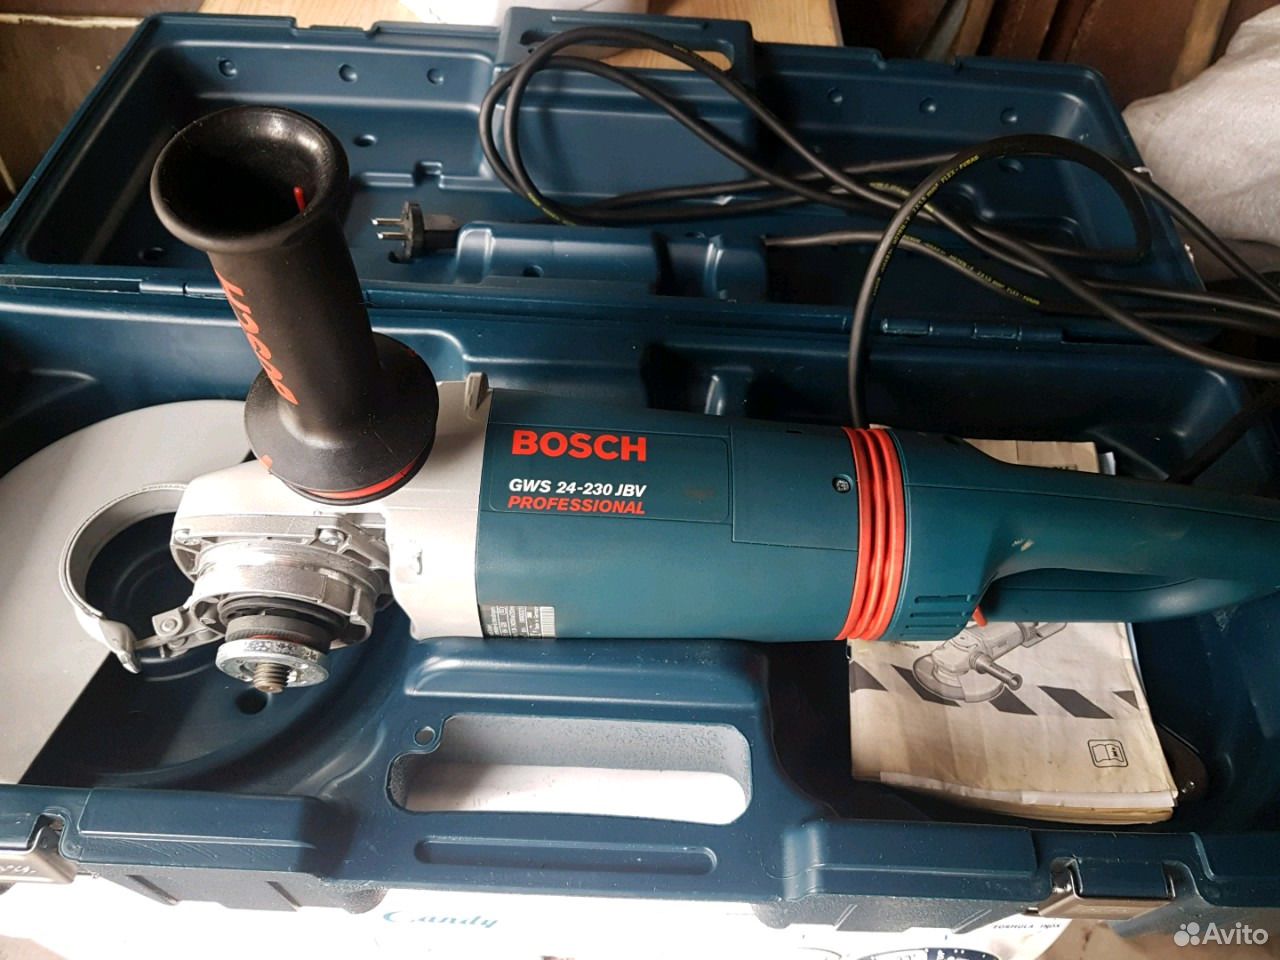 Купить bosch 230. Bosch GWS 26-230 H professional. УШМ бош 230. УШМ 24-230 бош. УШМ болгарка Bosch 230.